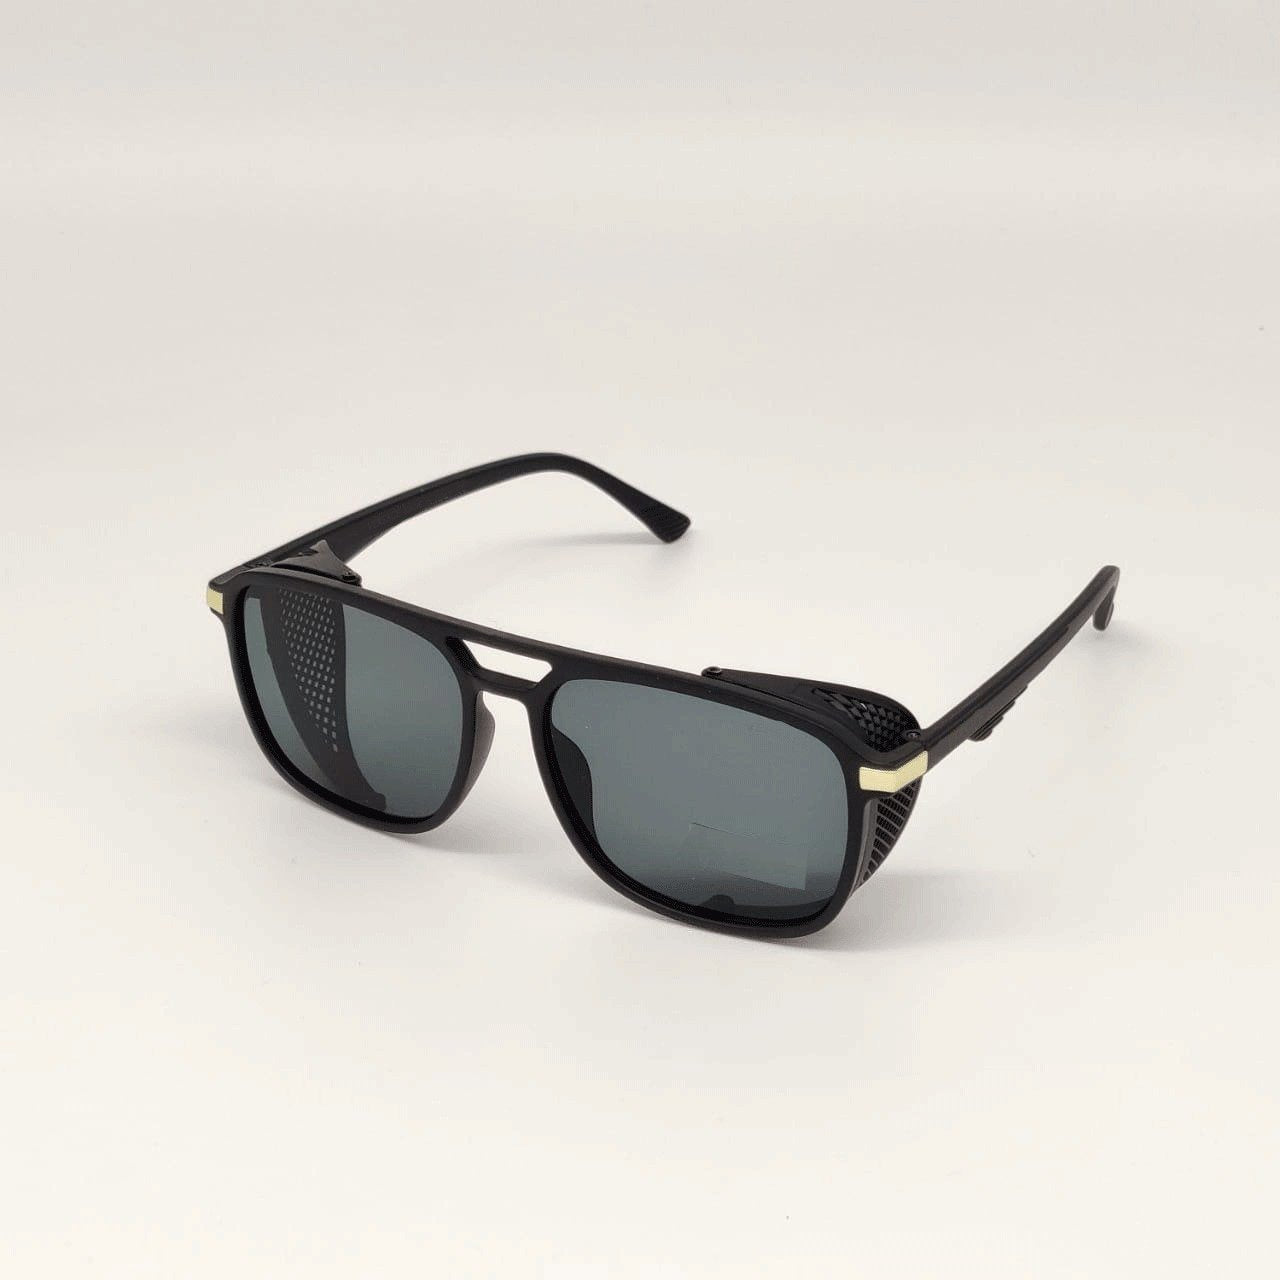 Stylish Square Cap Sunglasses For Men And Women-Unique and Classy